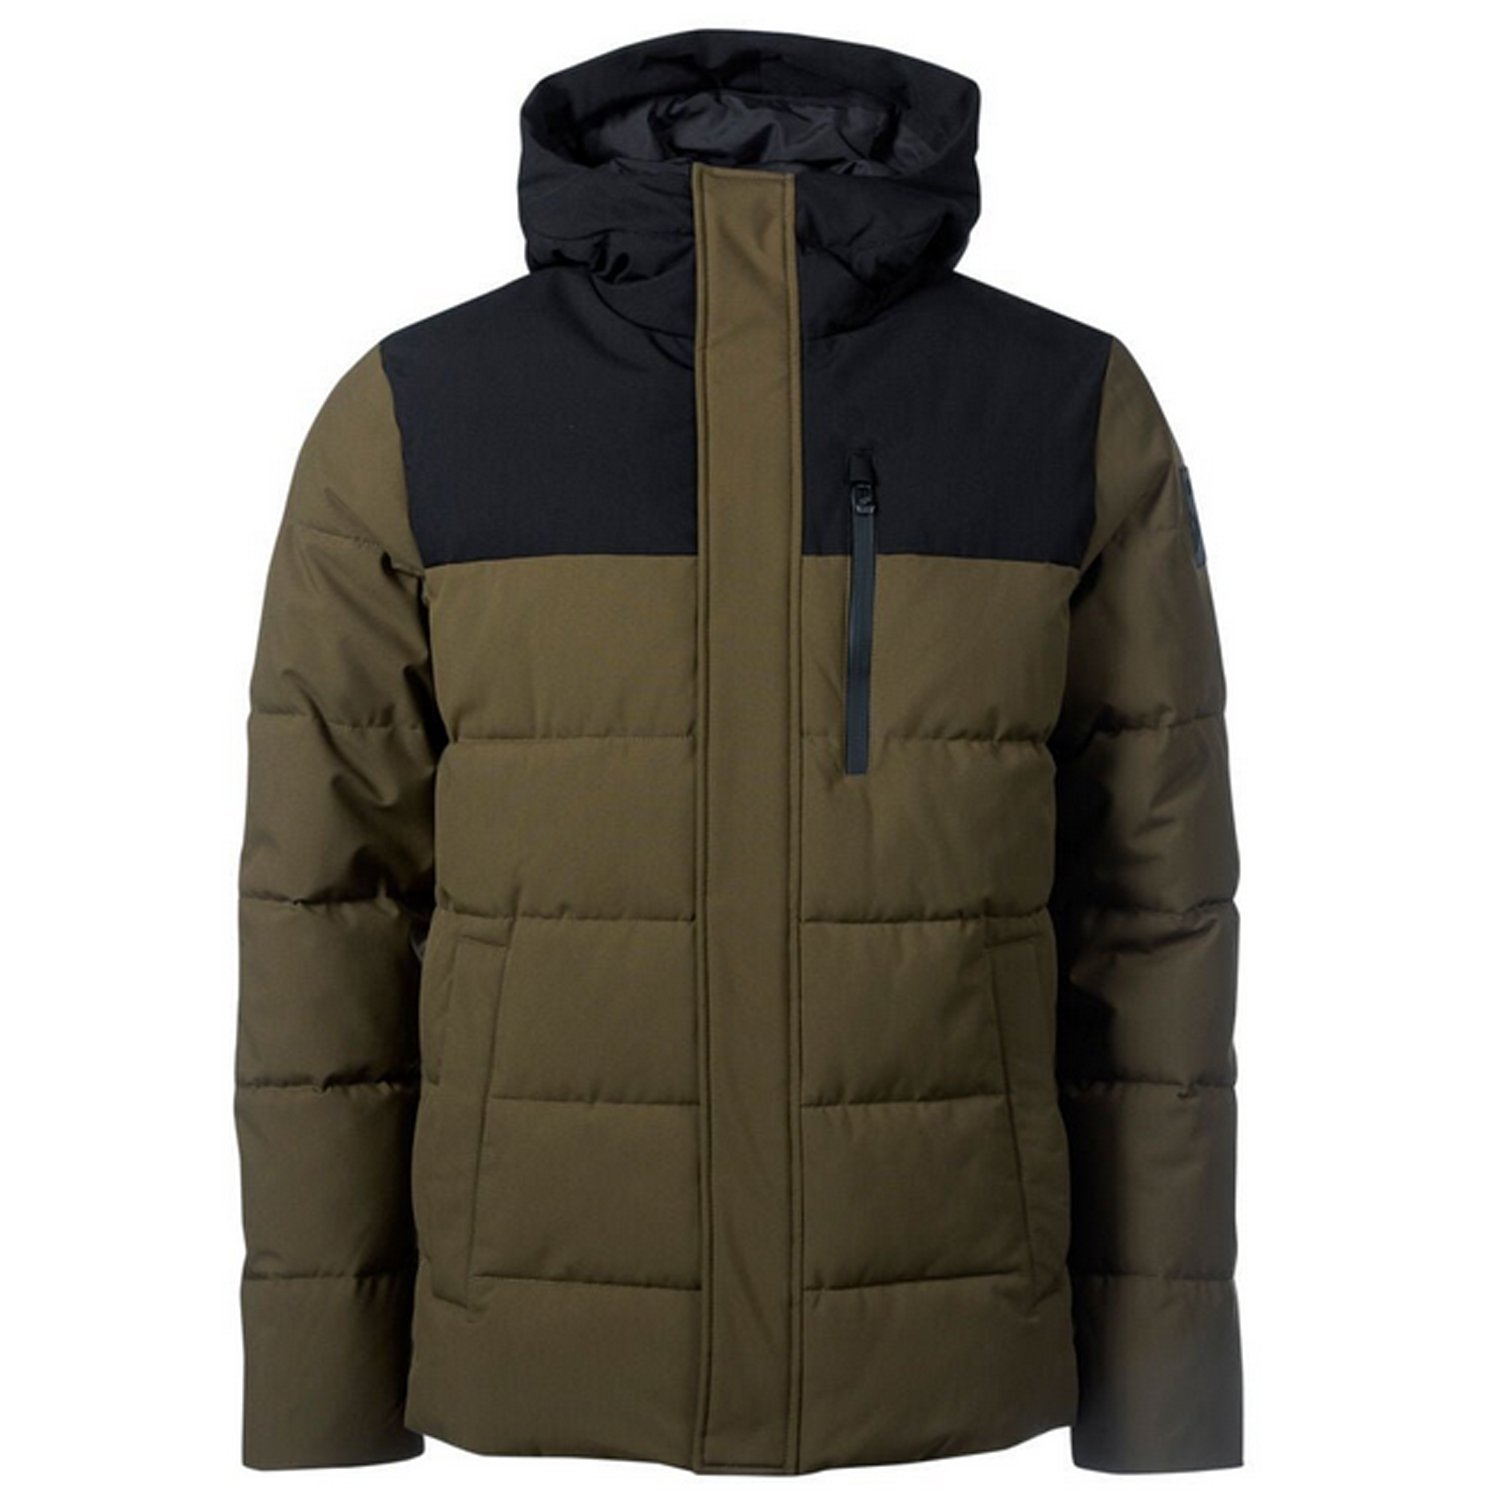 Куртка мужская Halti Haaga, dark olive, EH065-0390-U57 куртка утепленная мужская fila monte зеленый